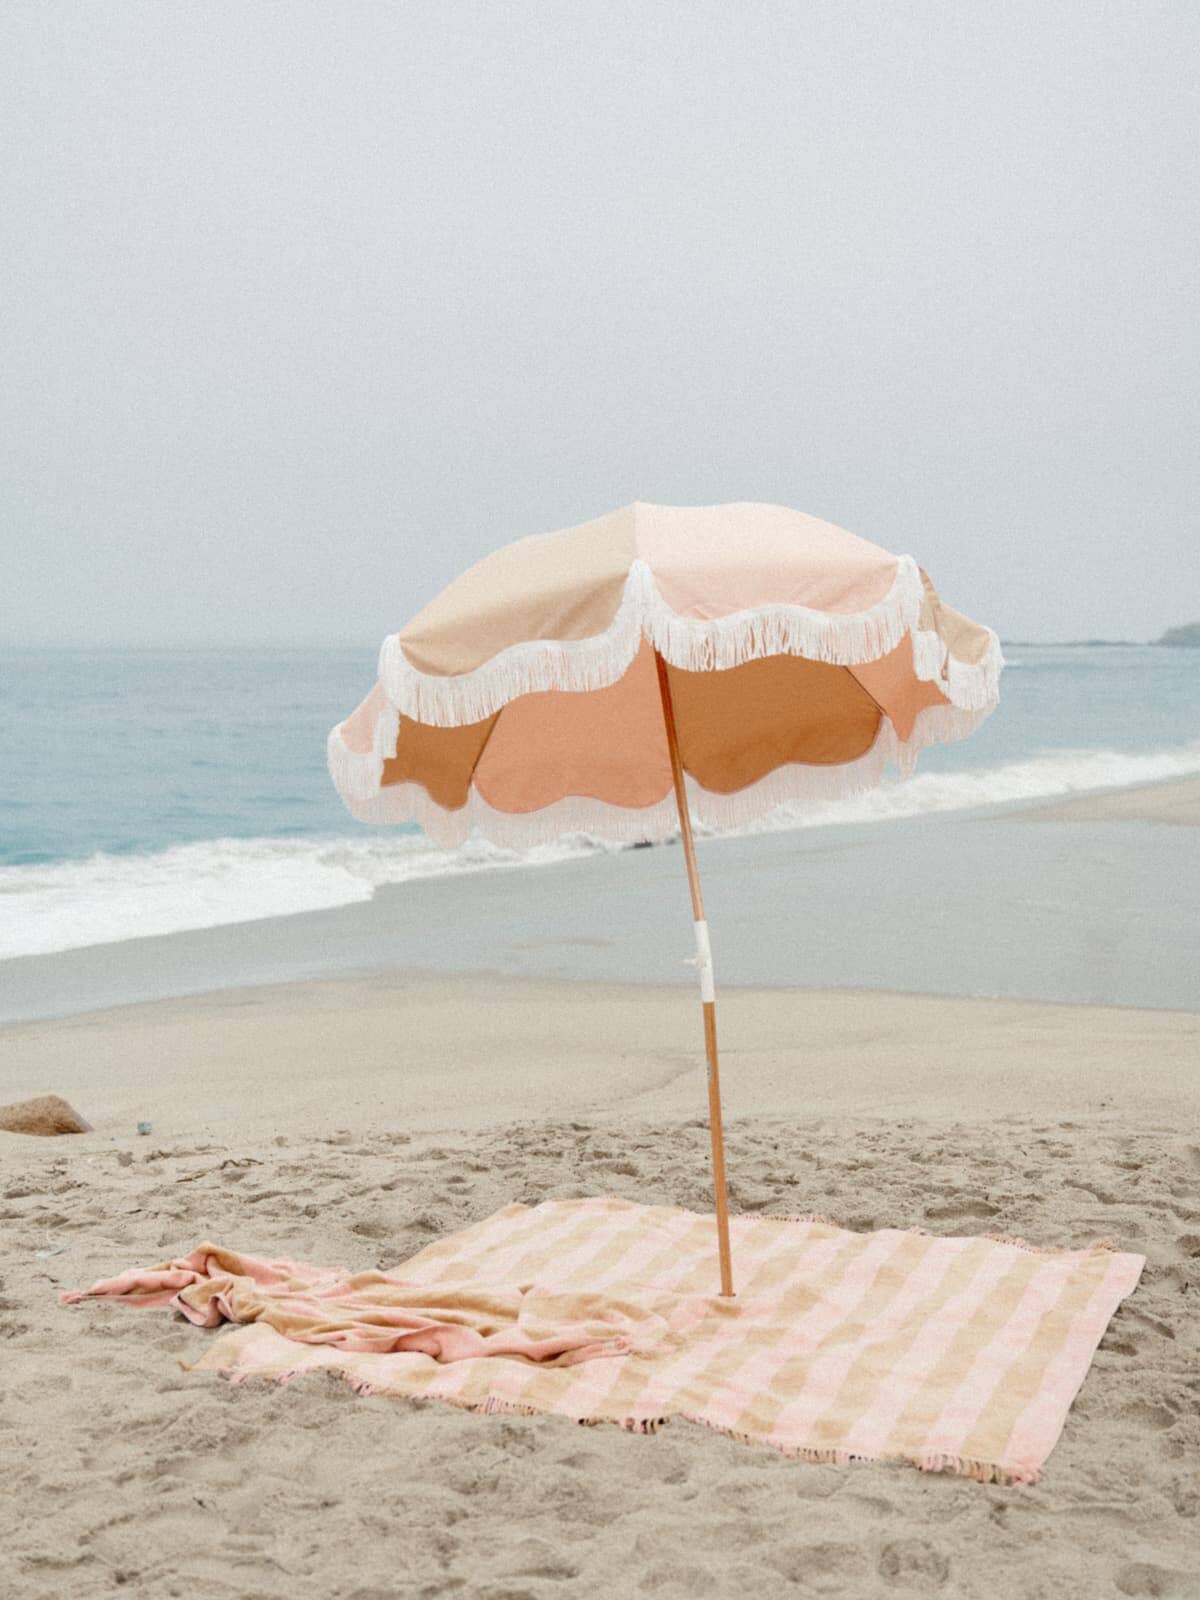 Sand & pink holiday umbrella on the beach